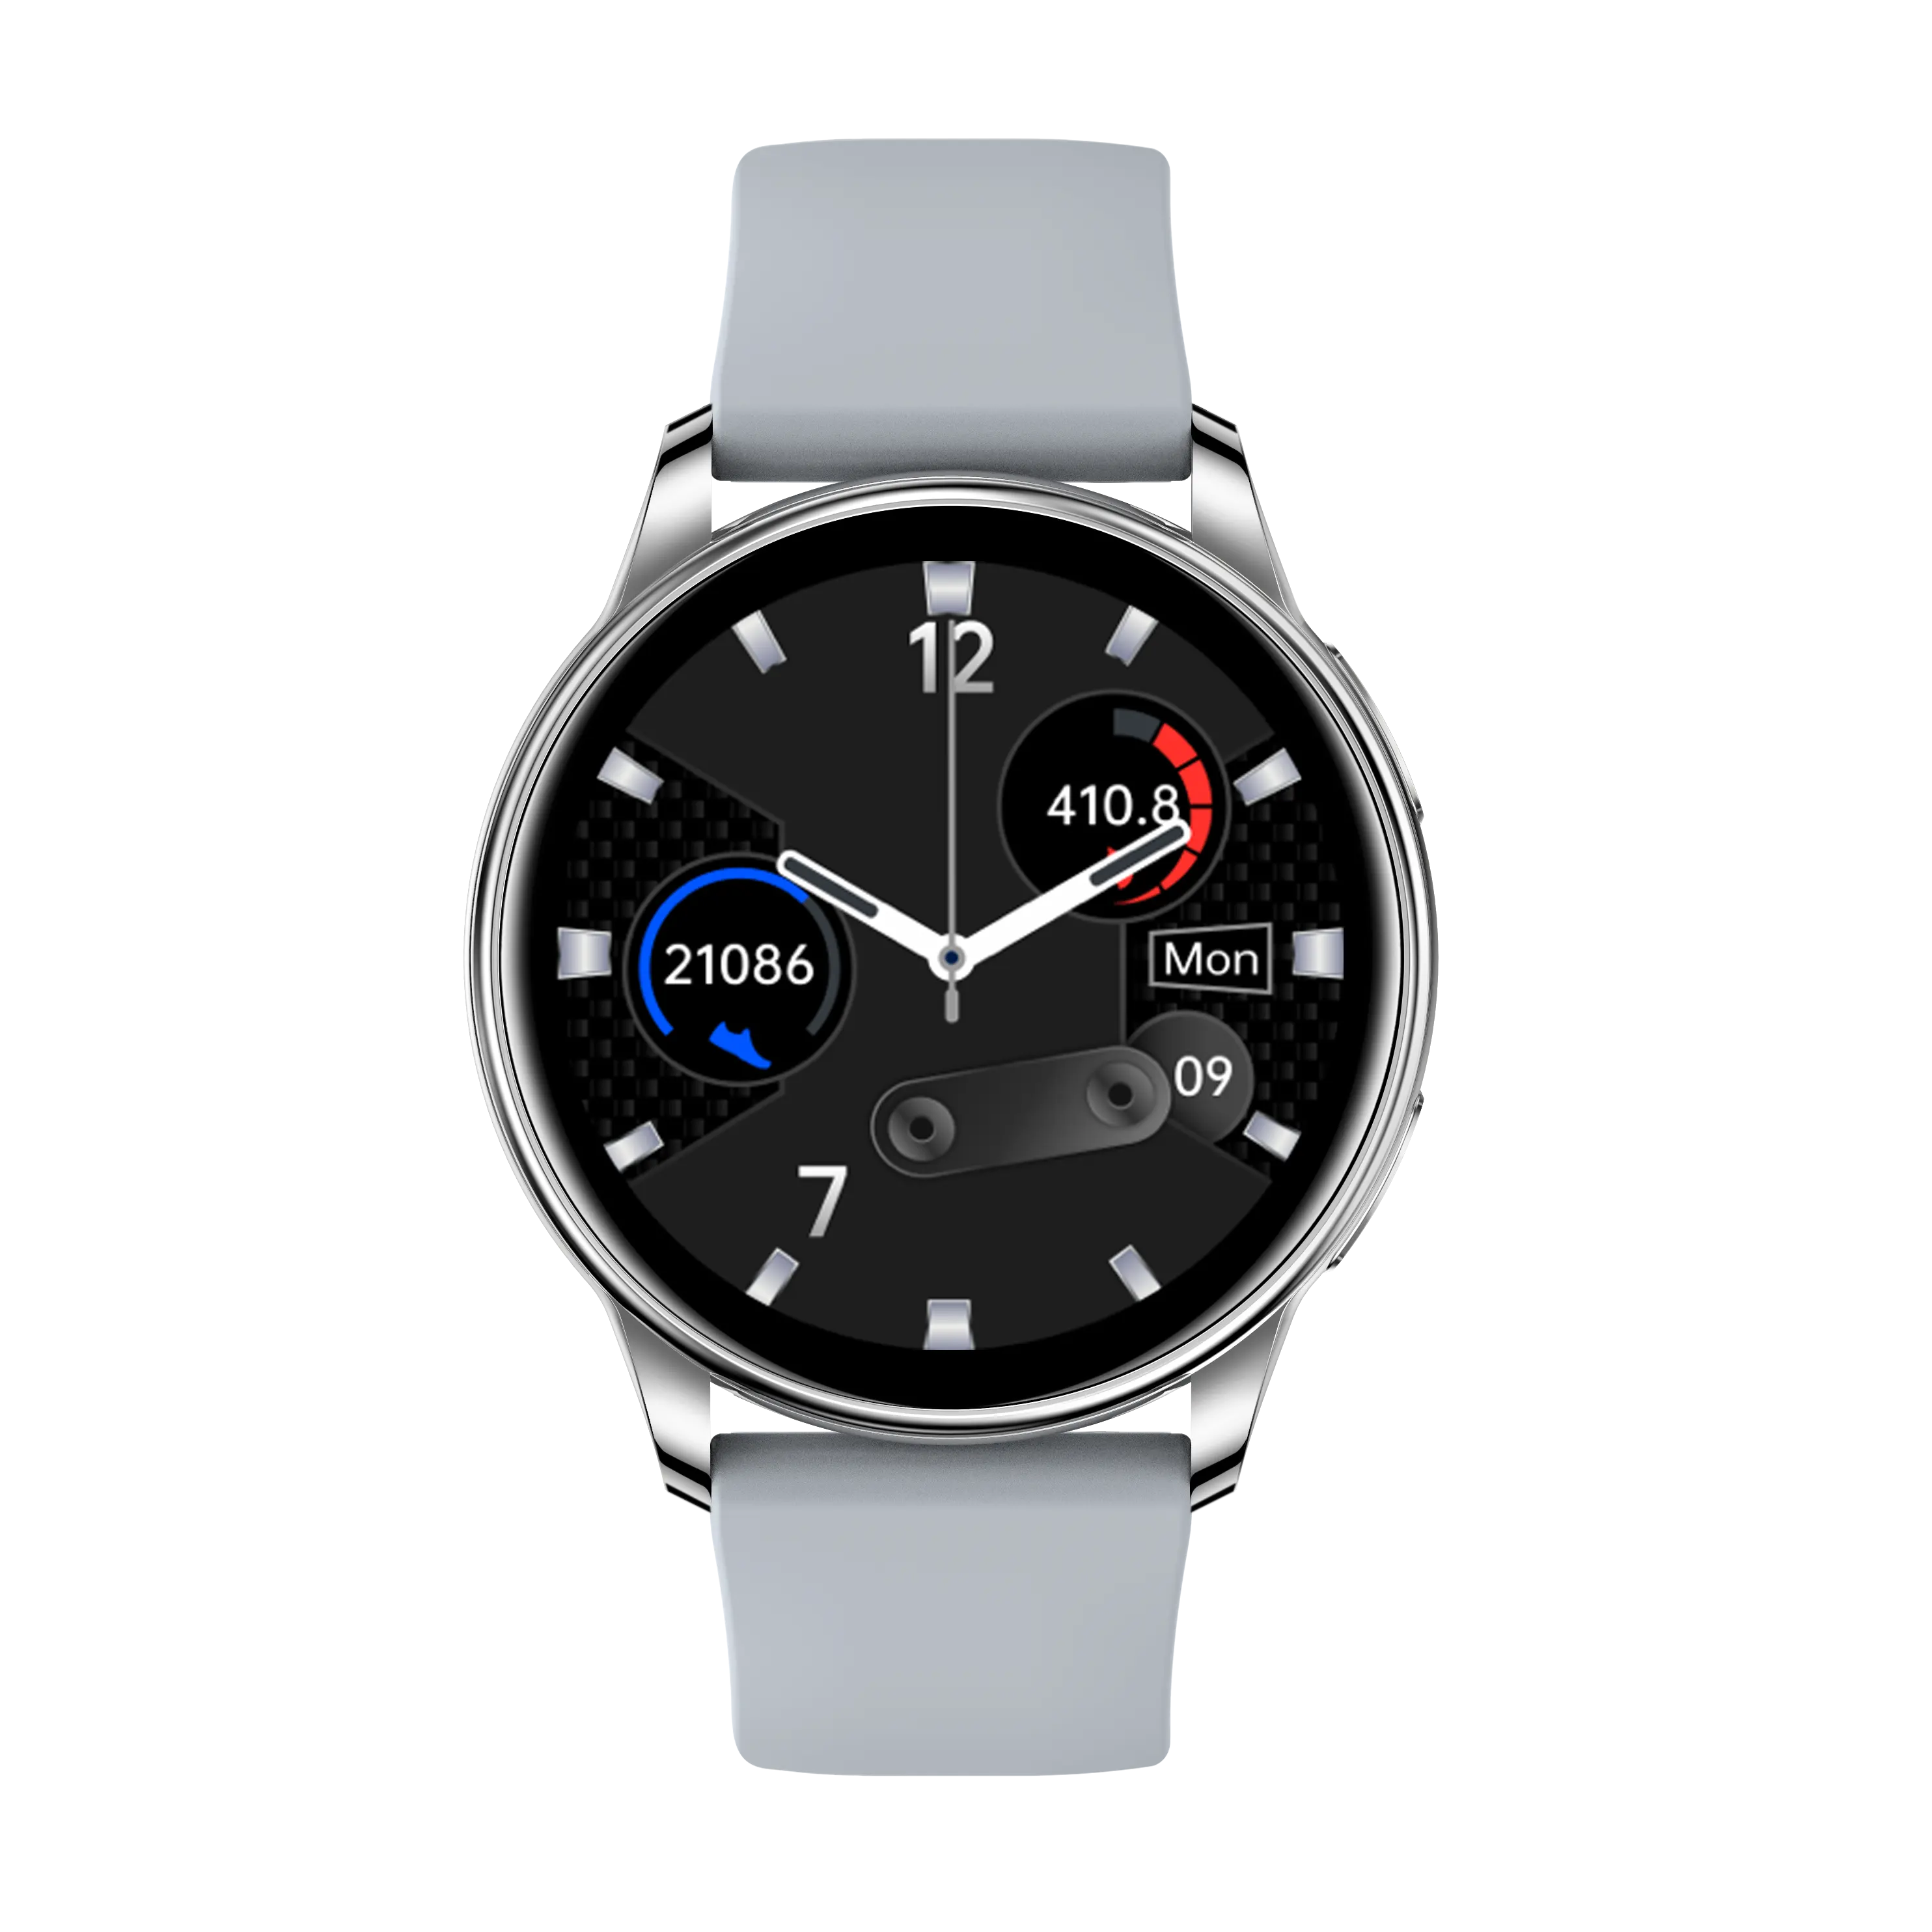 Oro nero grigio colore IP67 impermeabile Y33 smart watch health watches